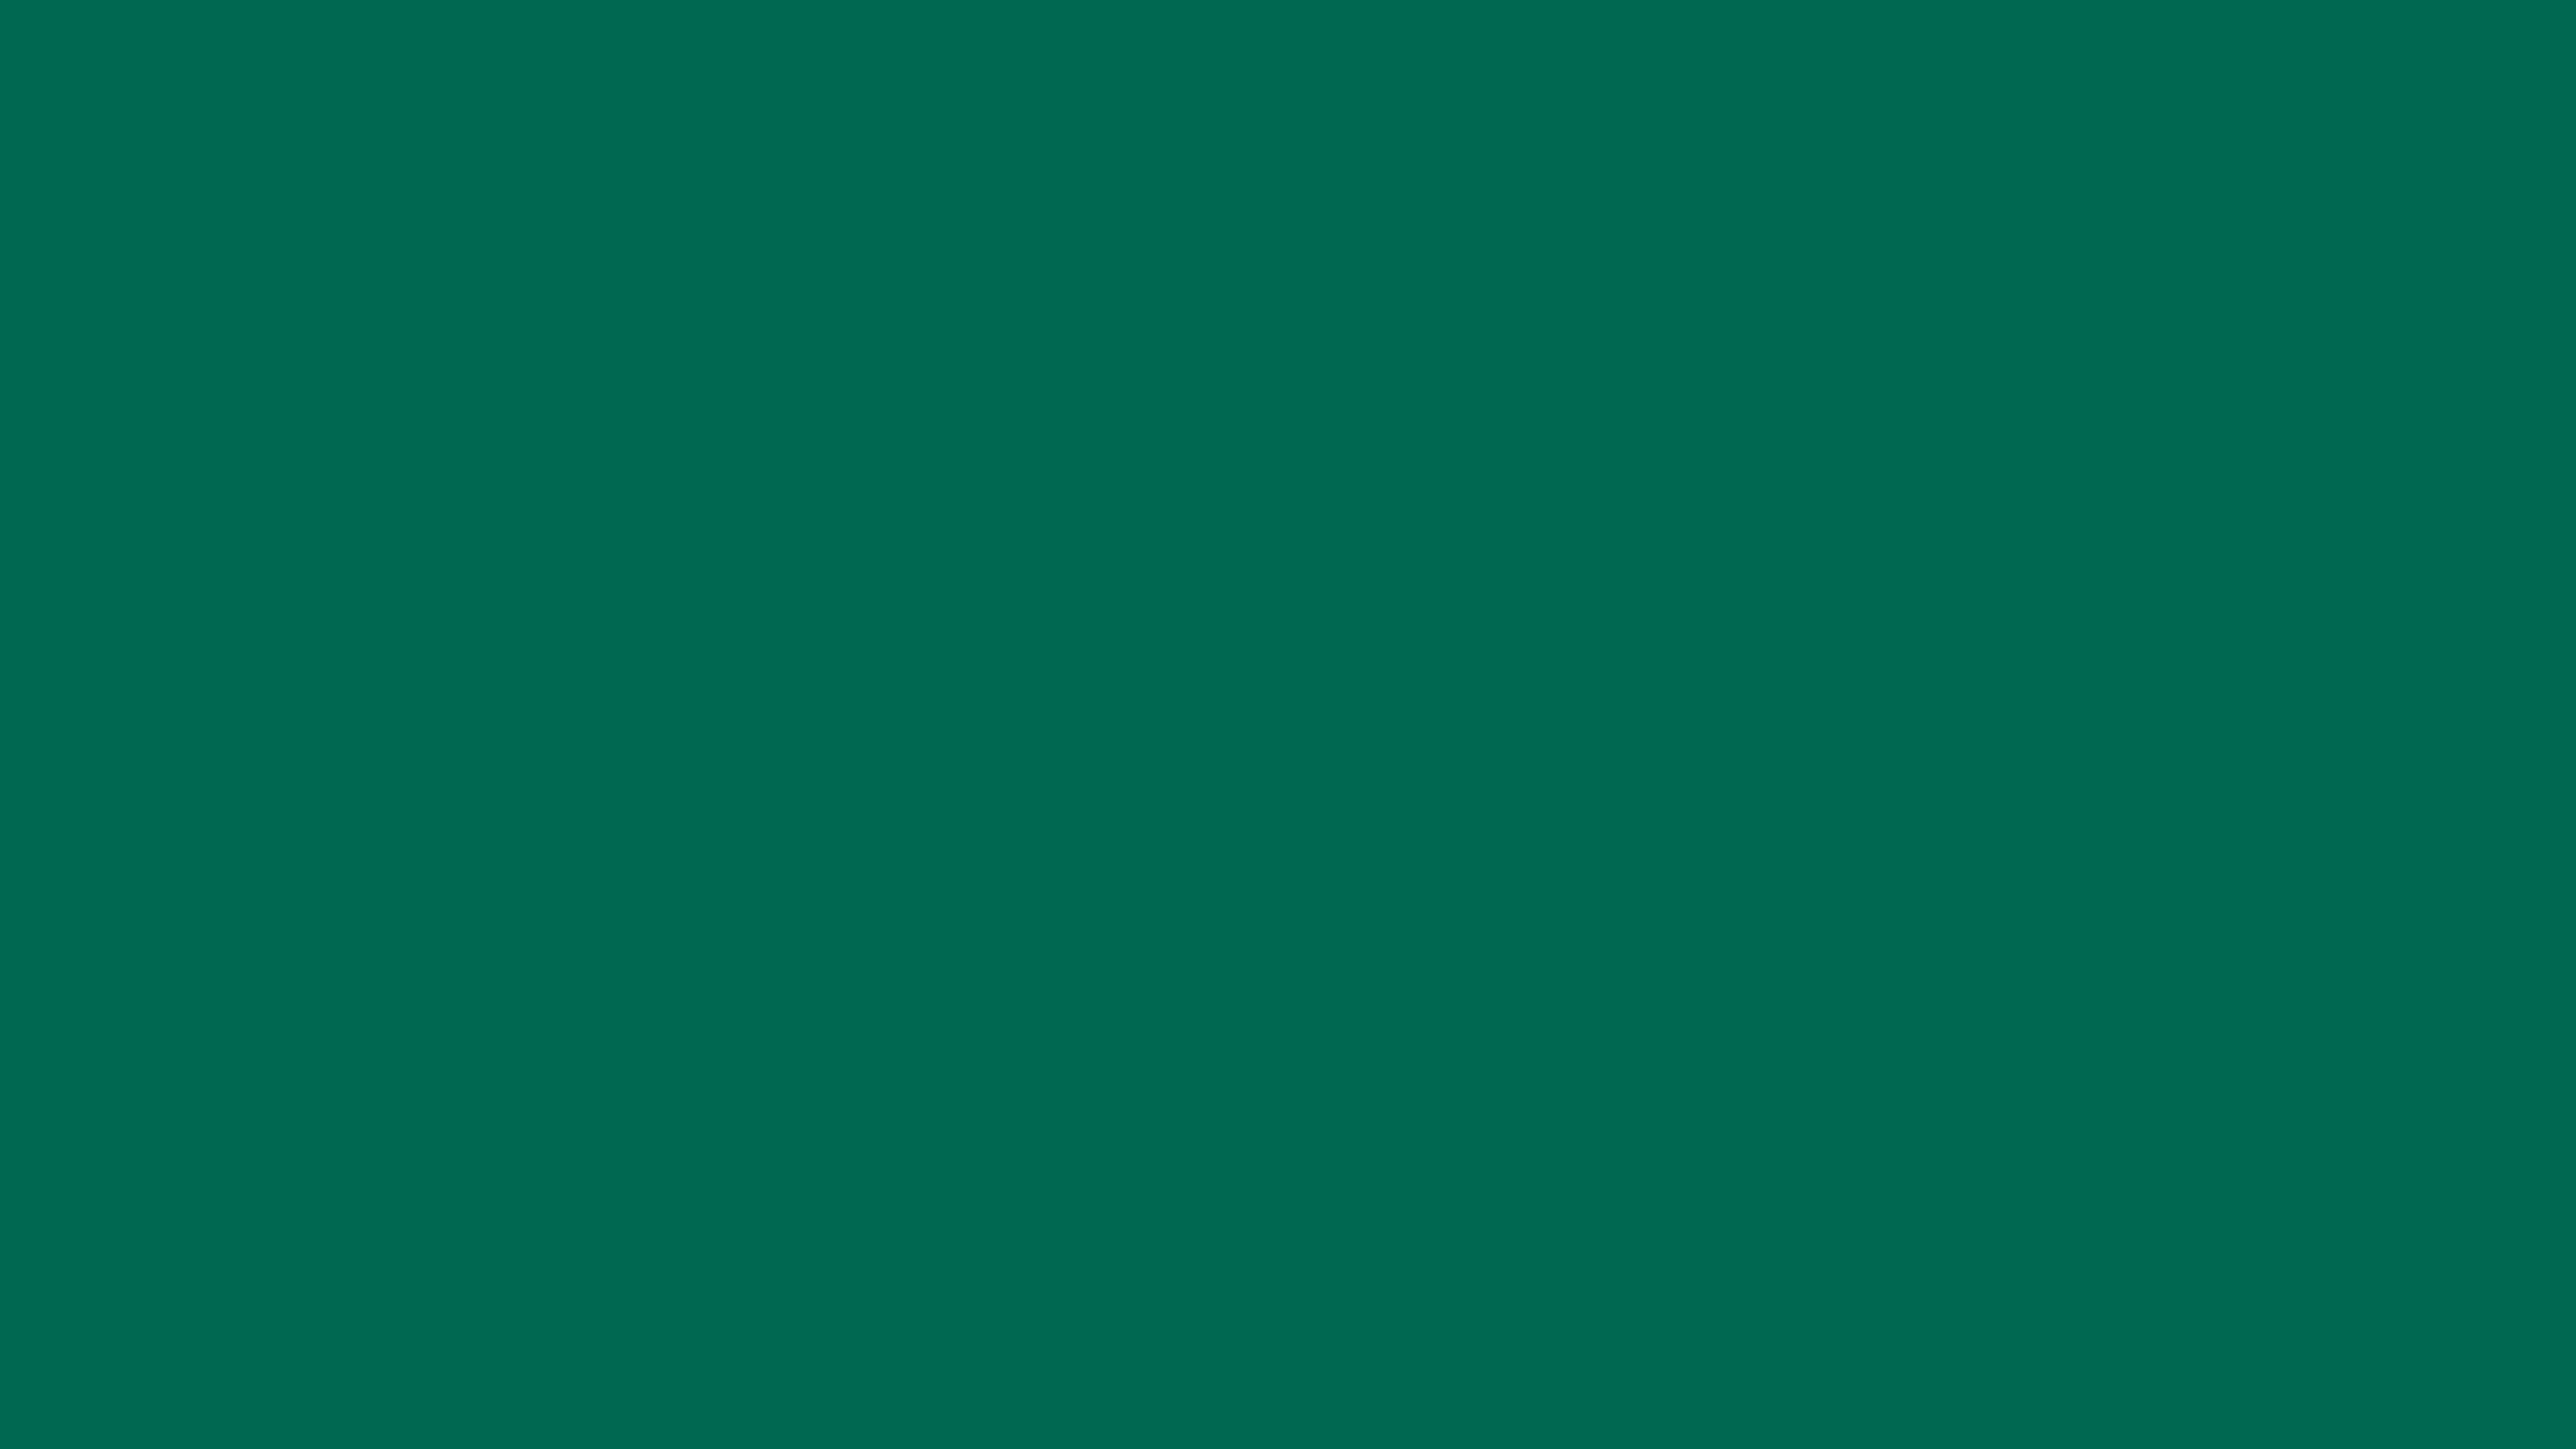 Peacock Green ( similar ) Color | 006851 information | Hsl | Rgb | Pantone